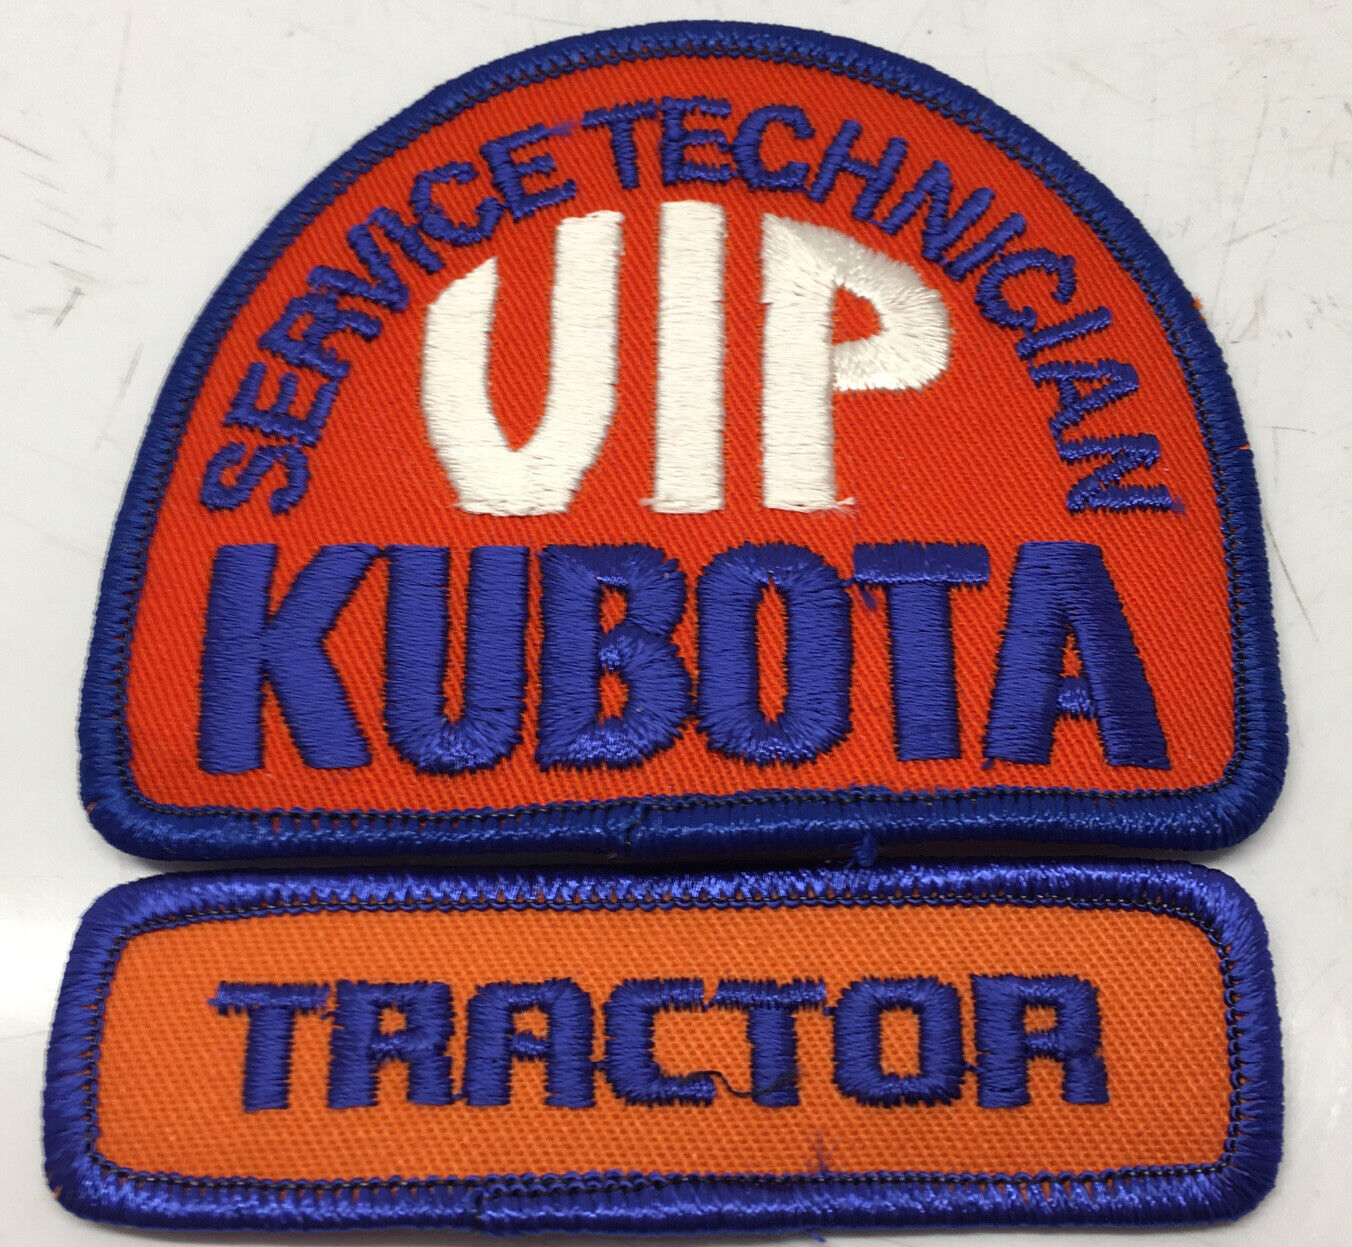 NOS kubota vip service technician tractor patch 4.25x3.75